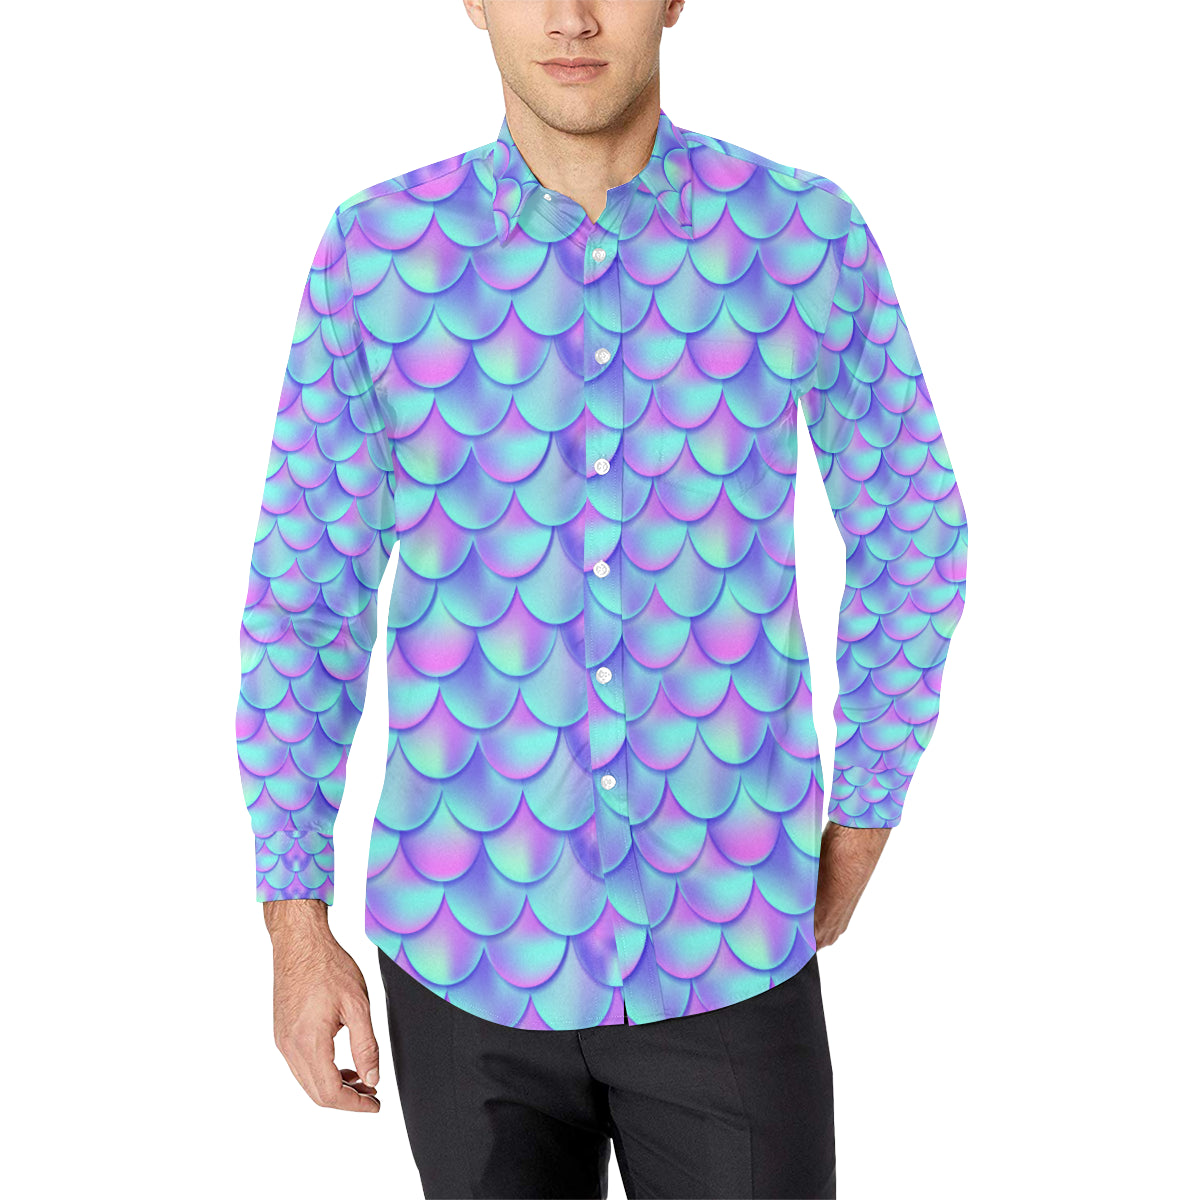 Mermaid Tail Design Print Pattern Men's Long Sleeve Shirt